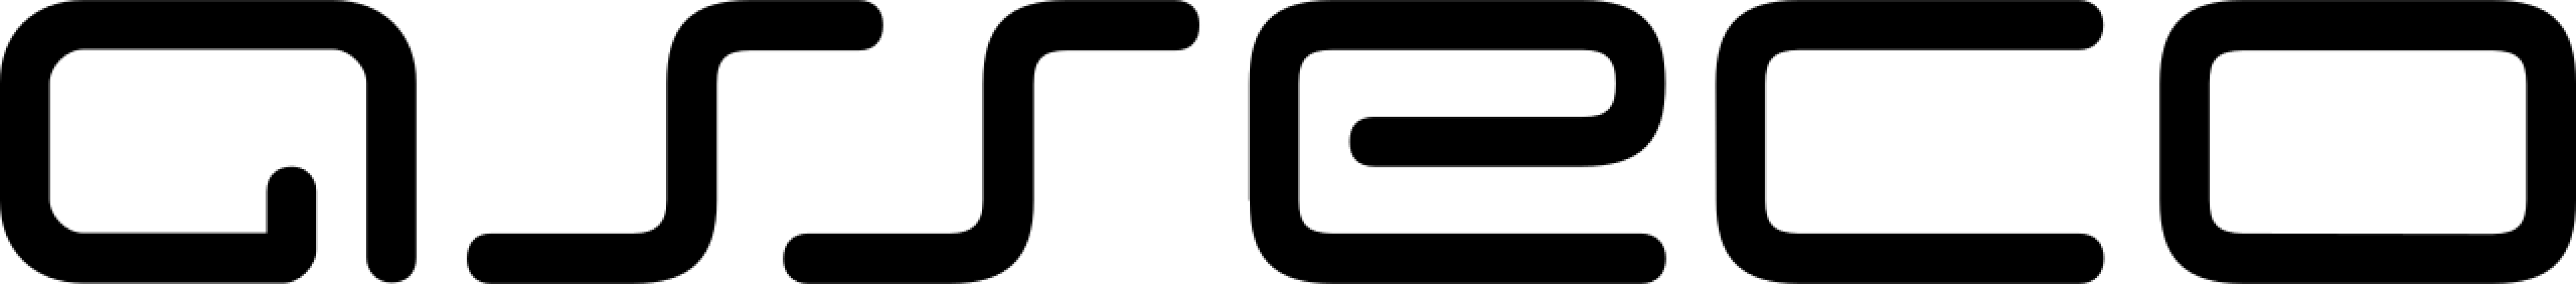 Logo firmy Asseco.